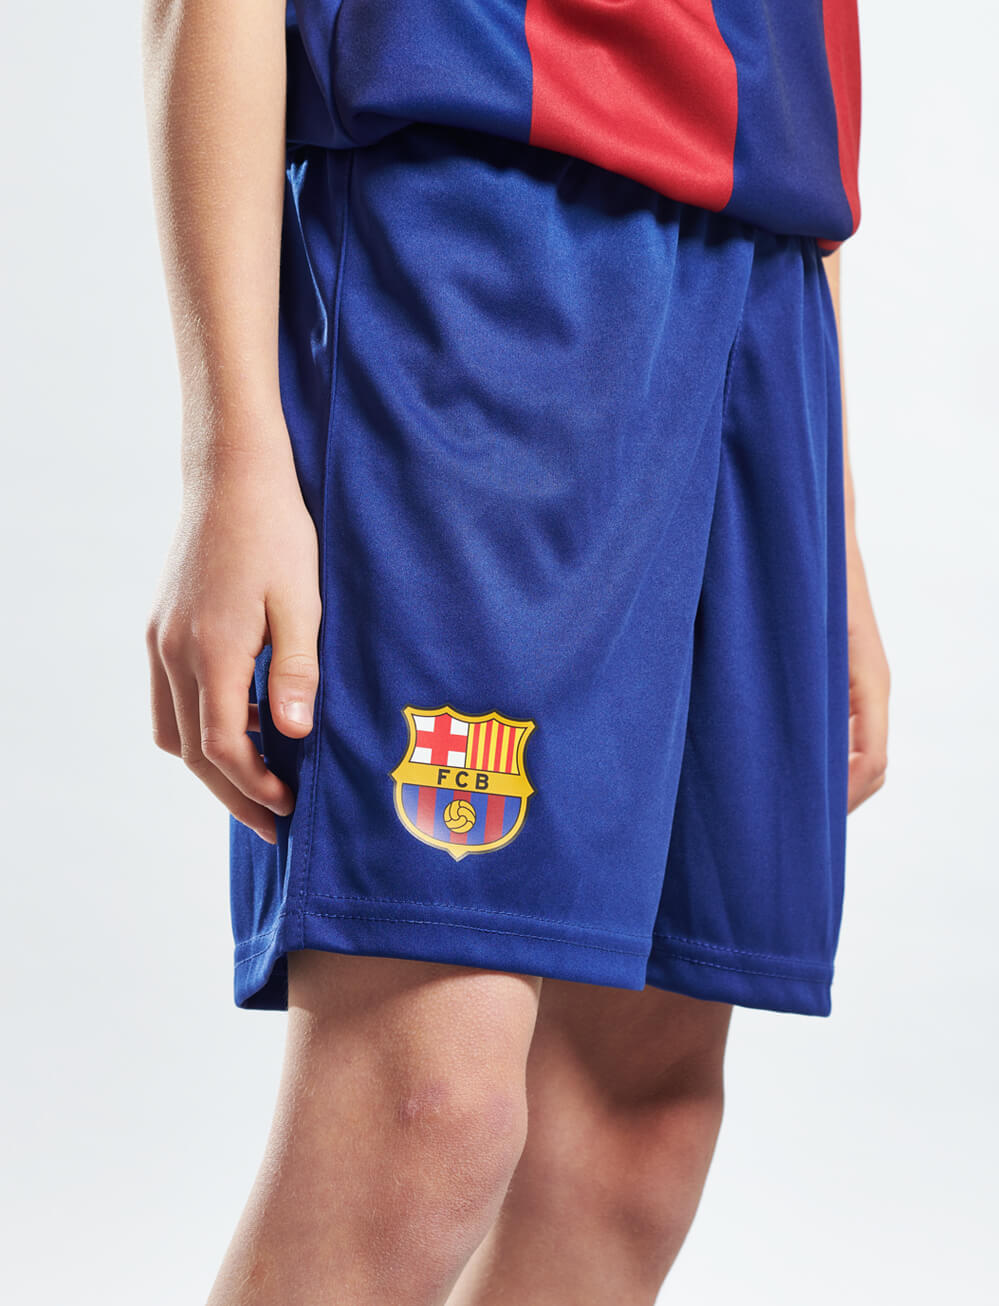 Official FC Barcelona Kids 1st Team Kit - Navy/Red - The World Football Store